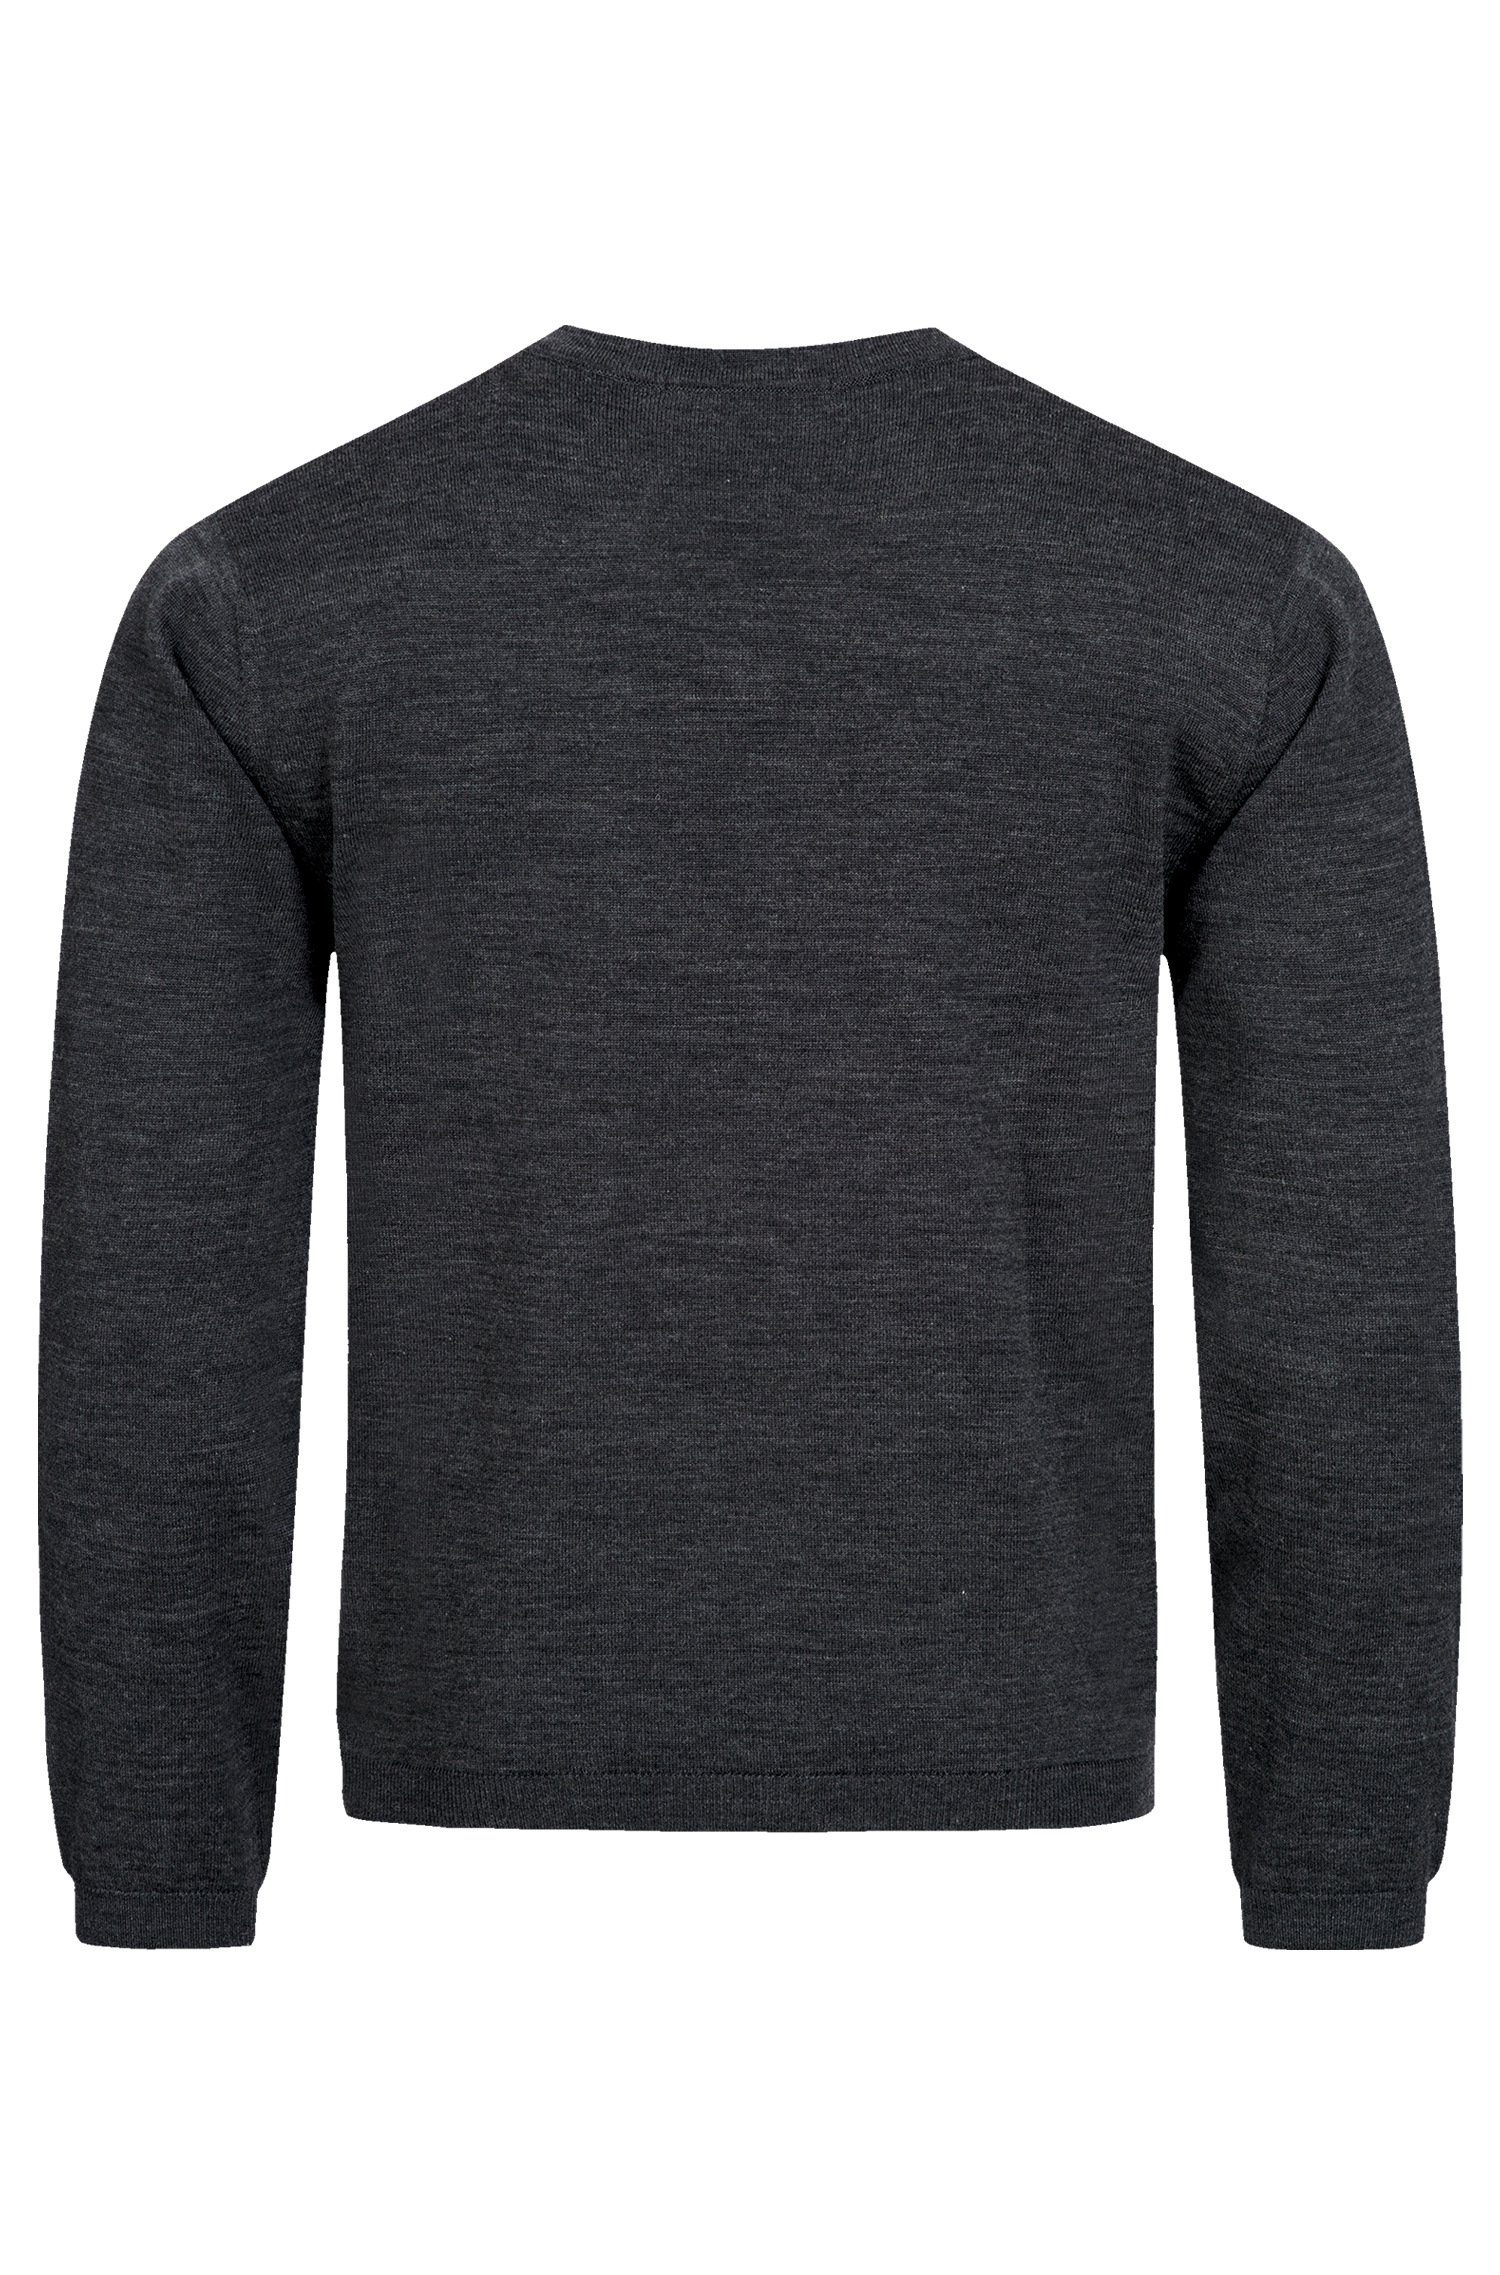 Men's sweater regular fit